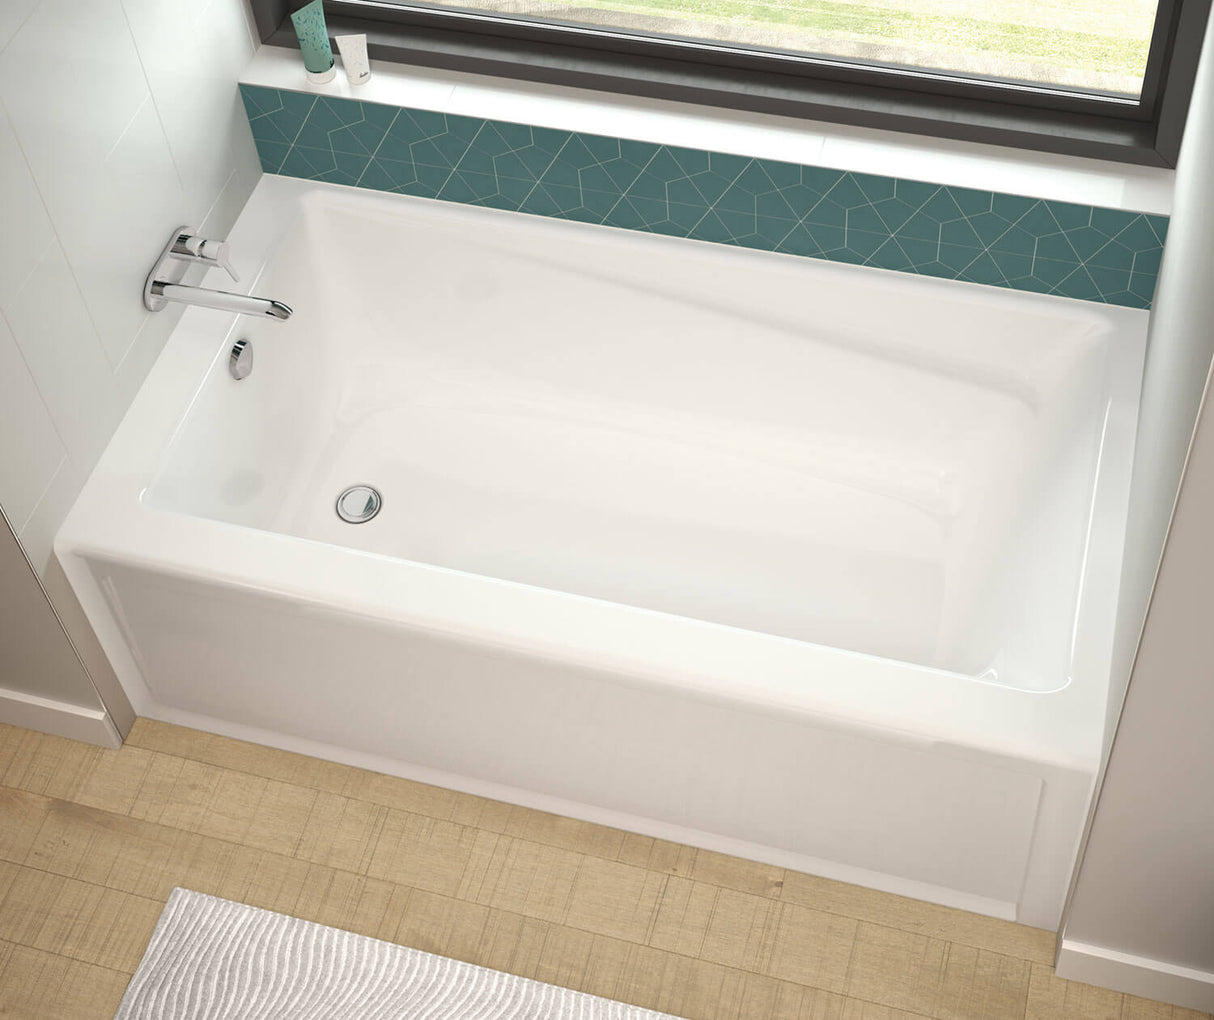 MAAX 105512-000-001-002 Exhibit 6032 IFS AFR Acrylic Alcove Right-Hand Drain Bathtub in White